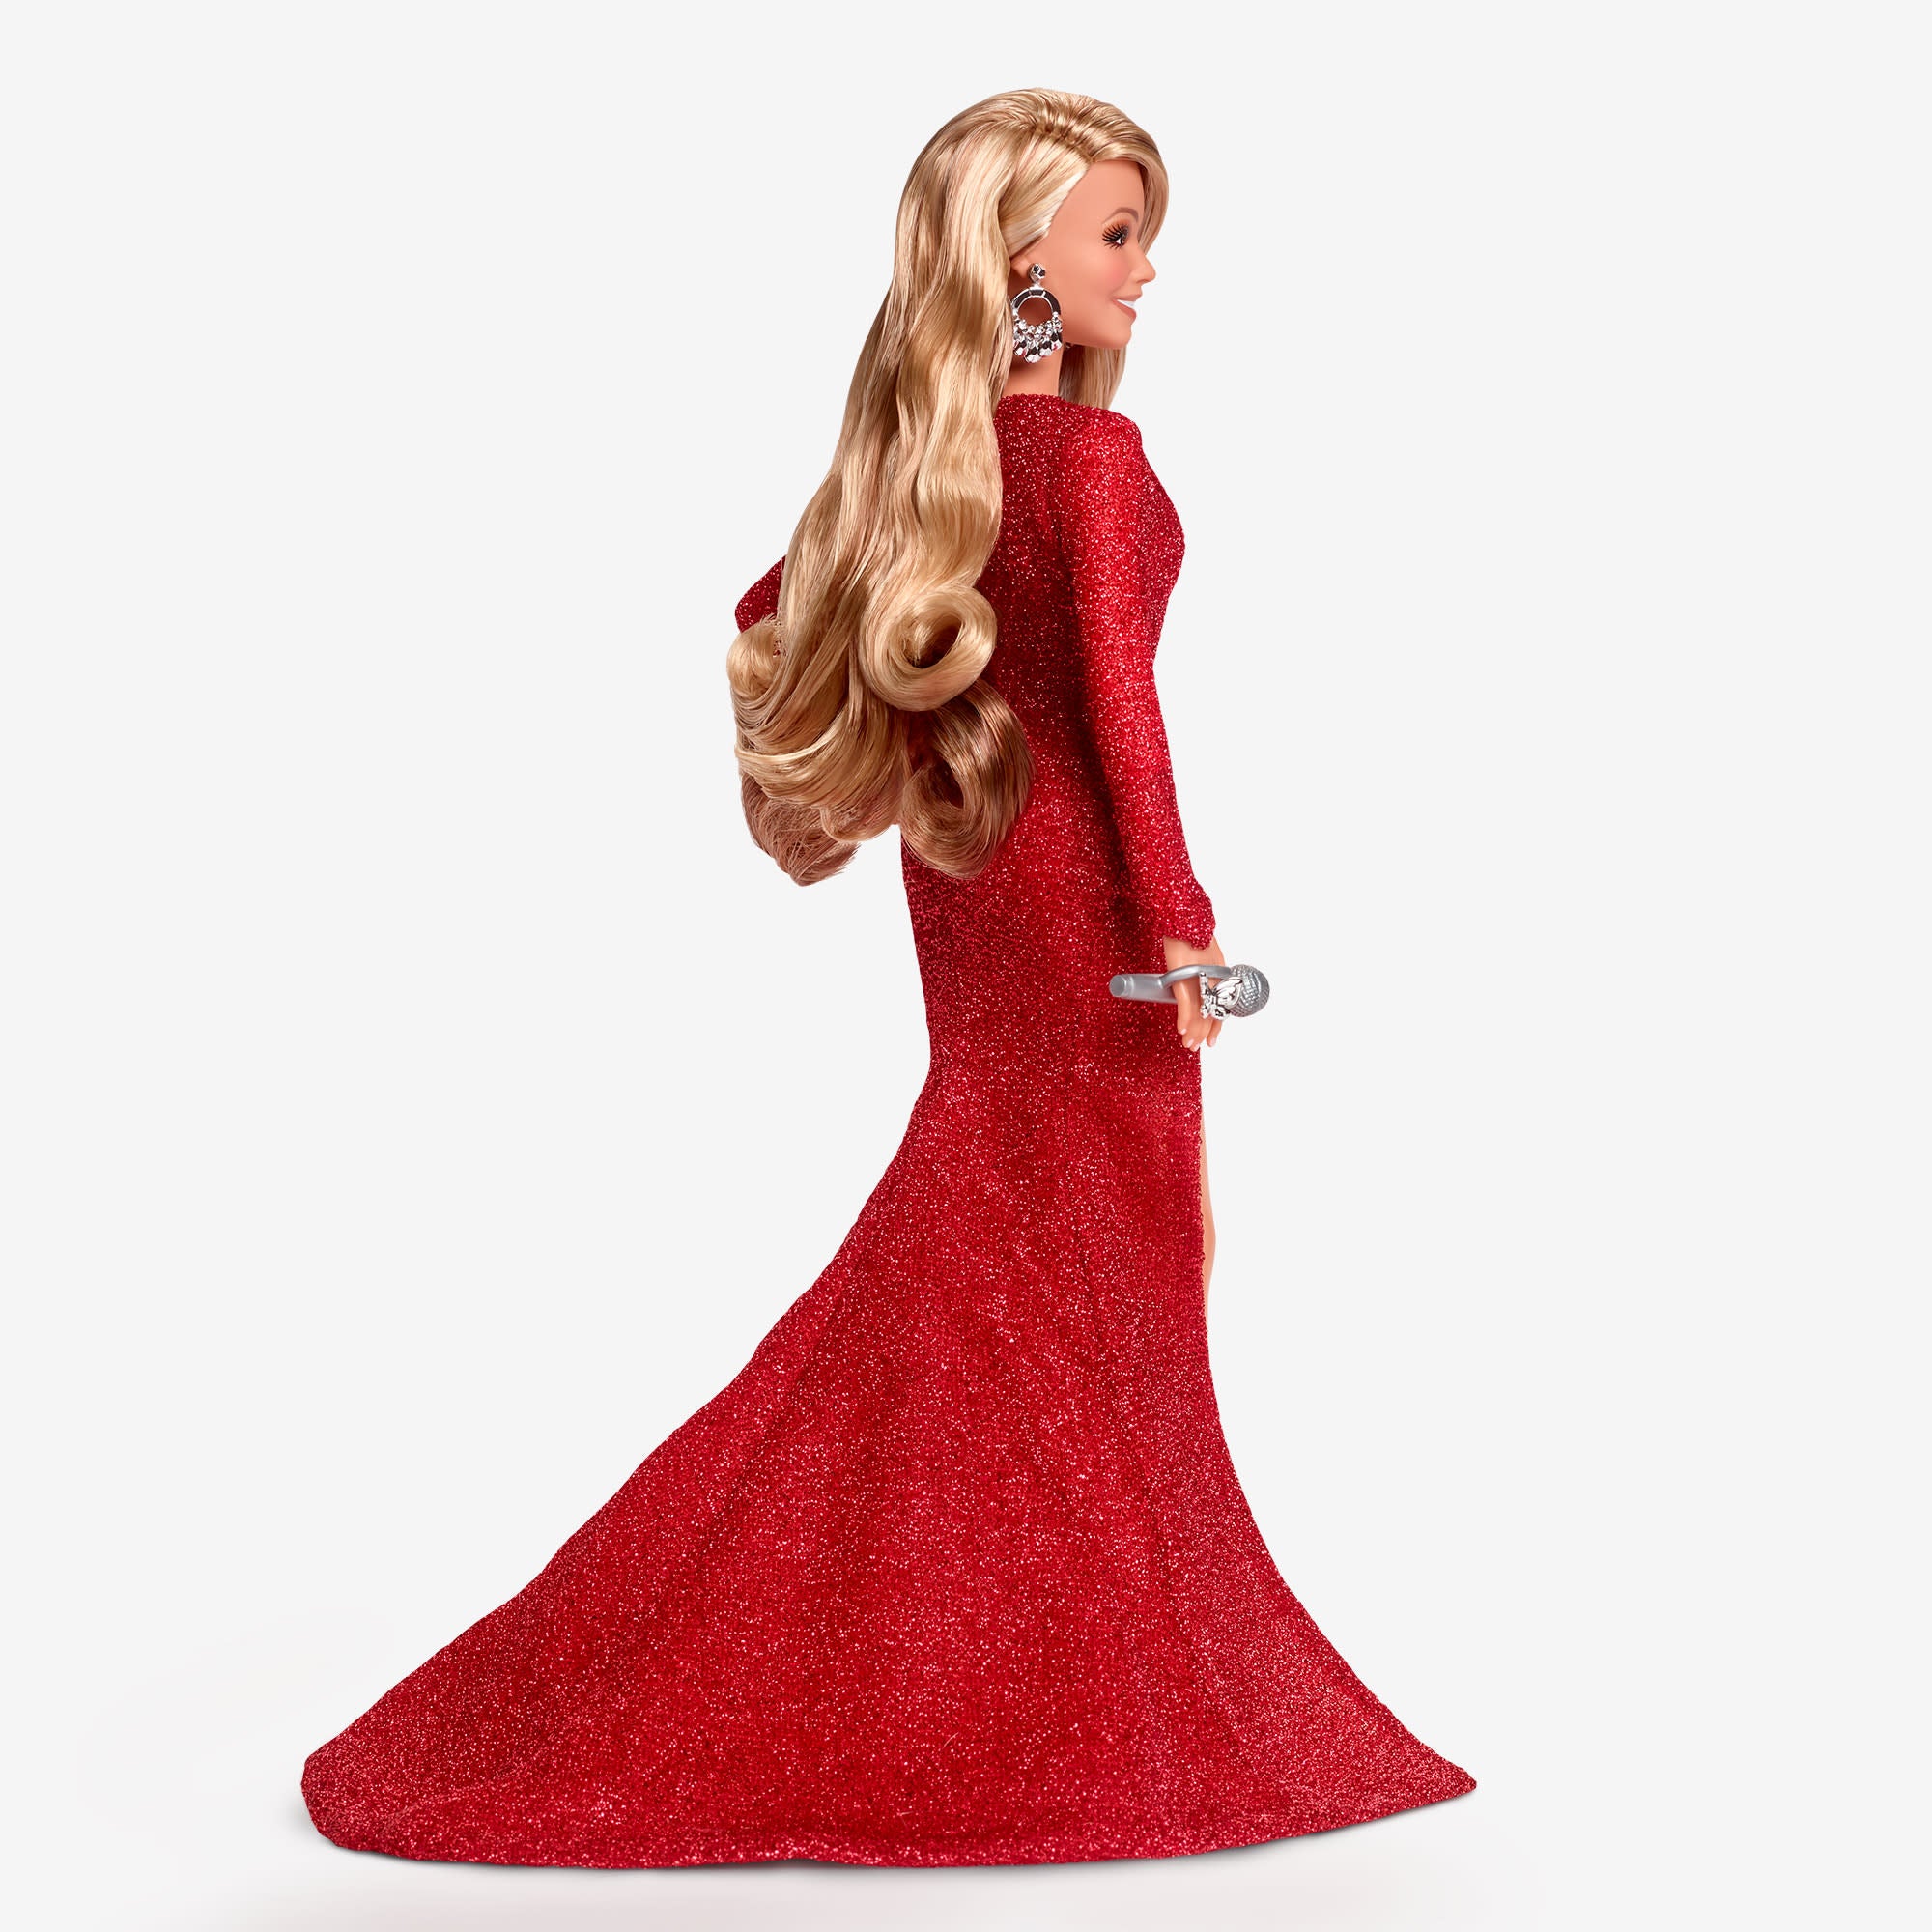 Christmas Dress 2019 - Barbie Signature doll